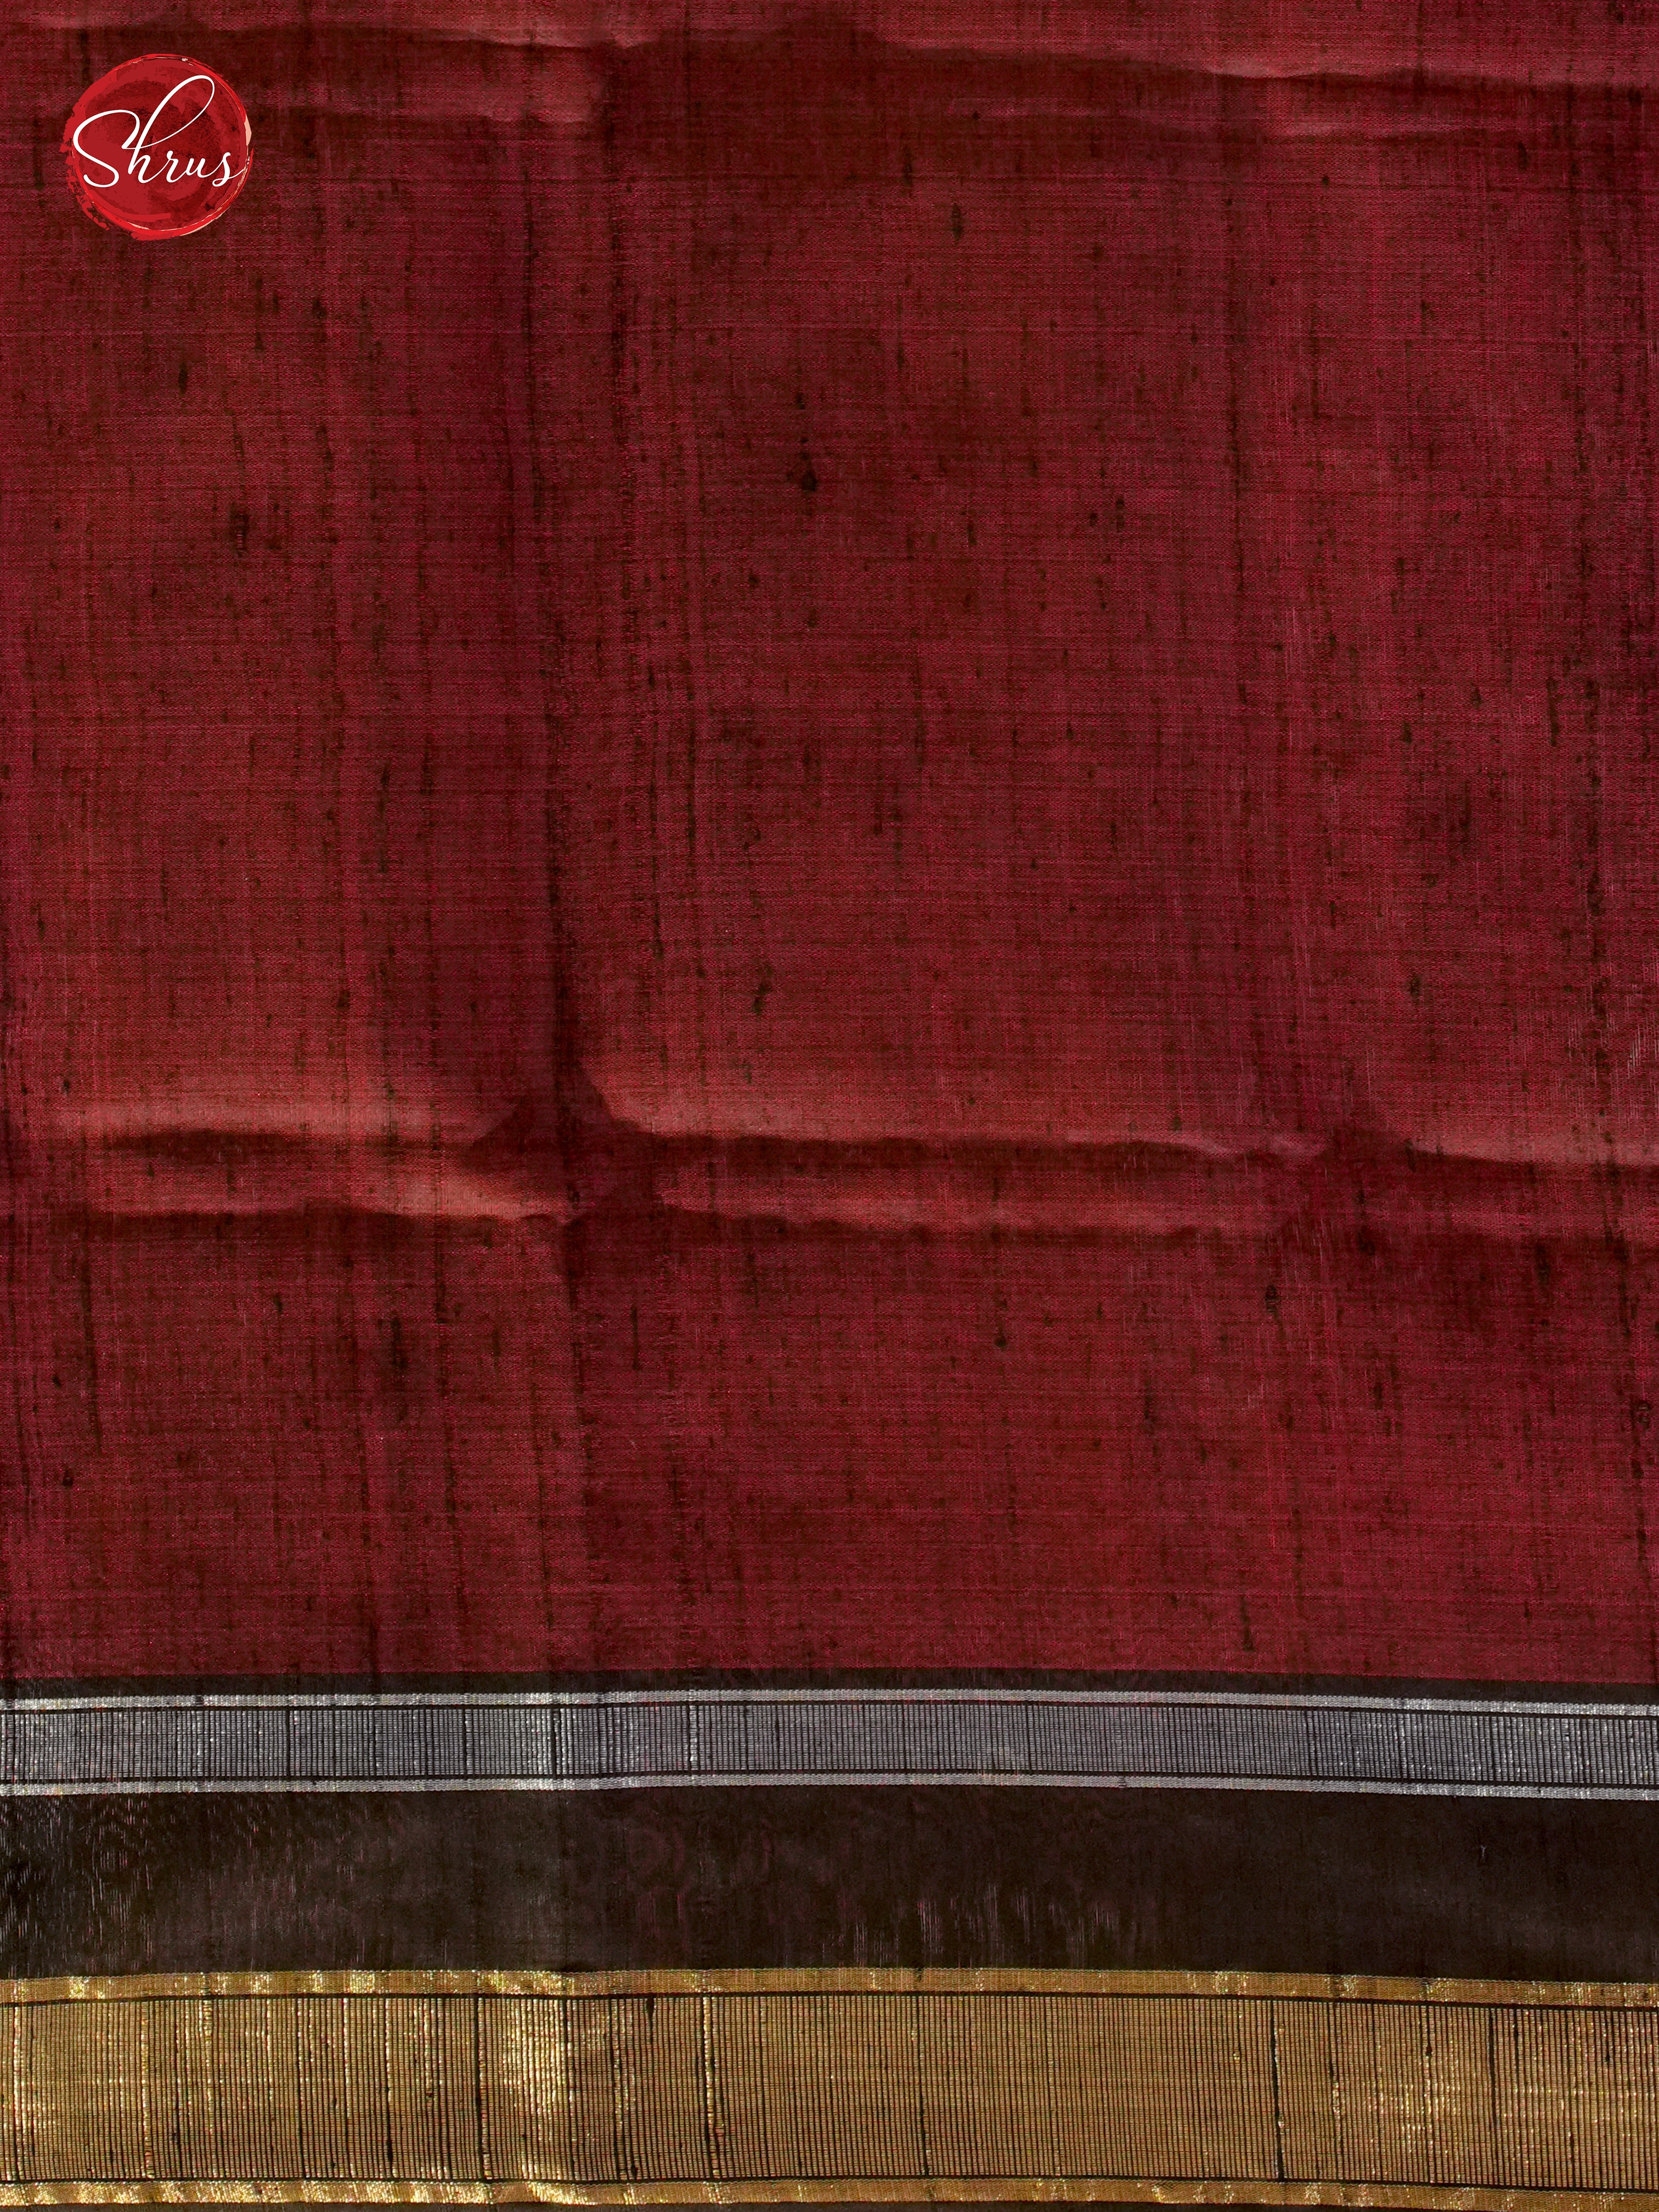 Red And Black-Raw silk saree